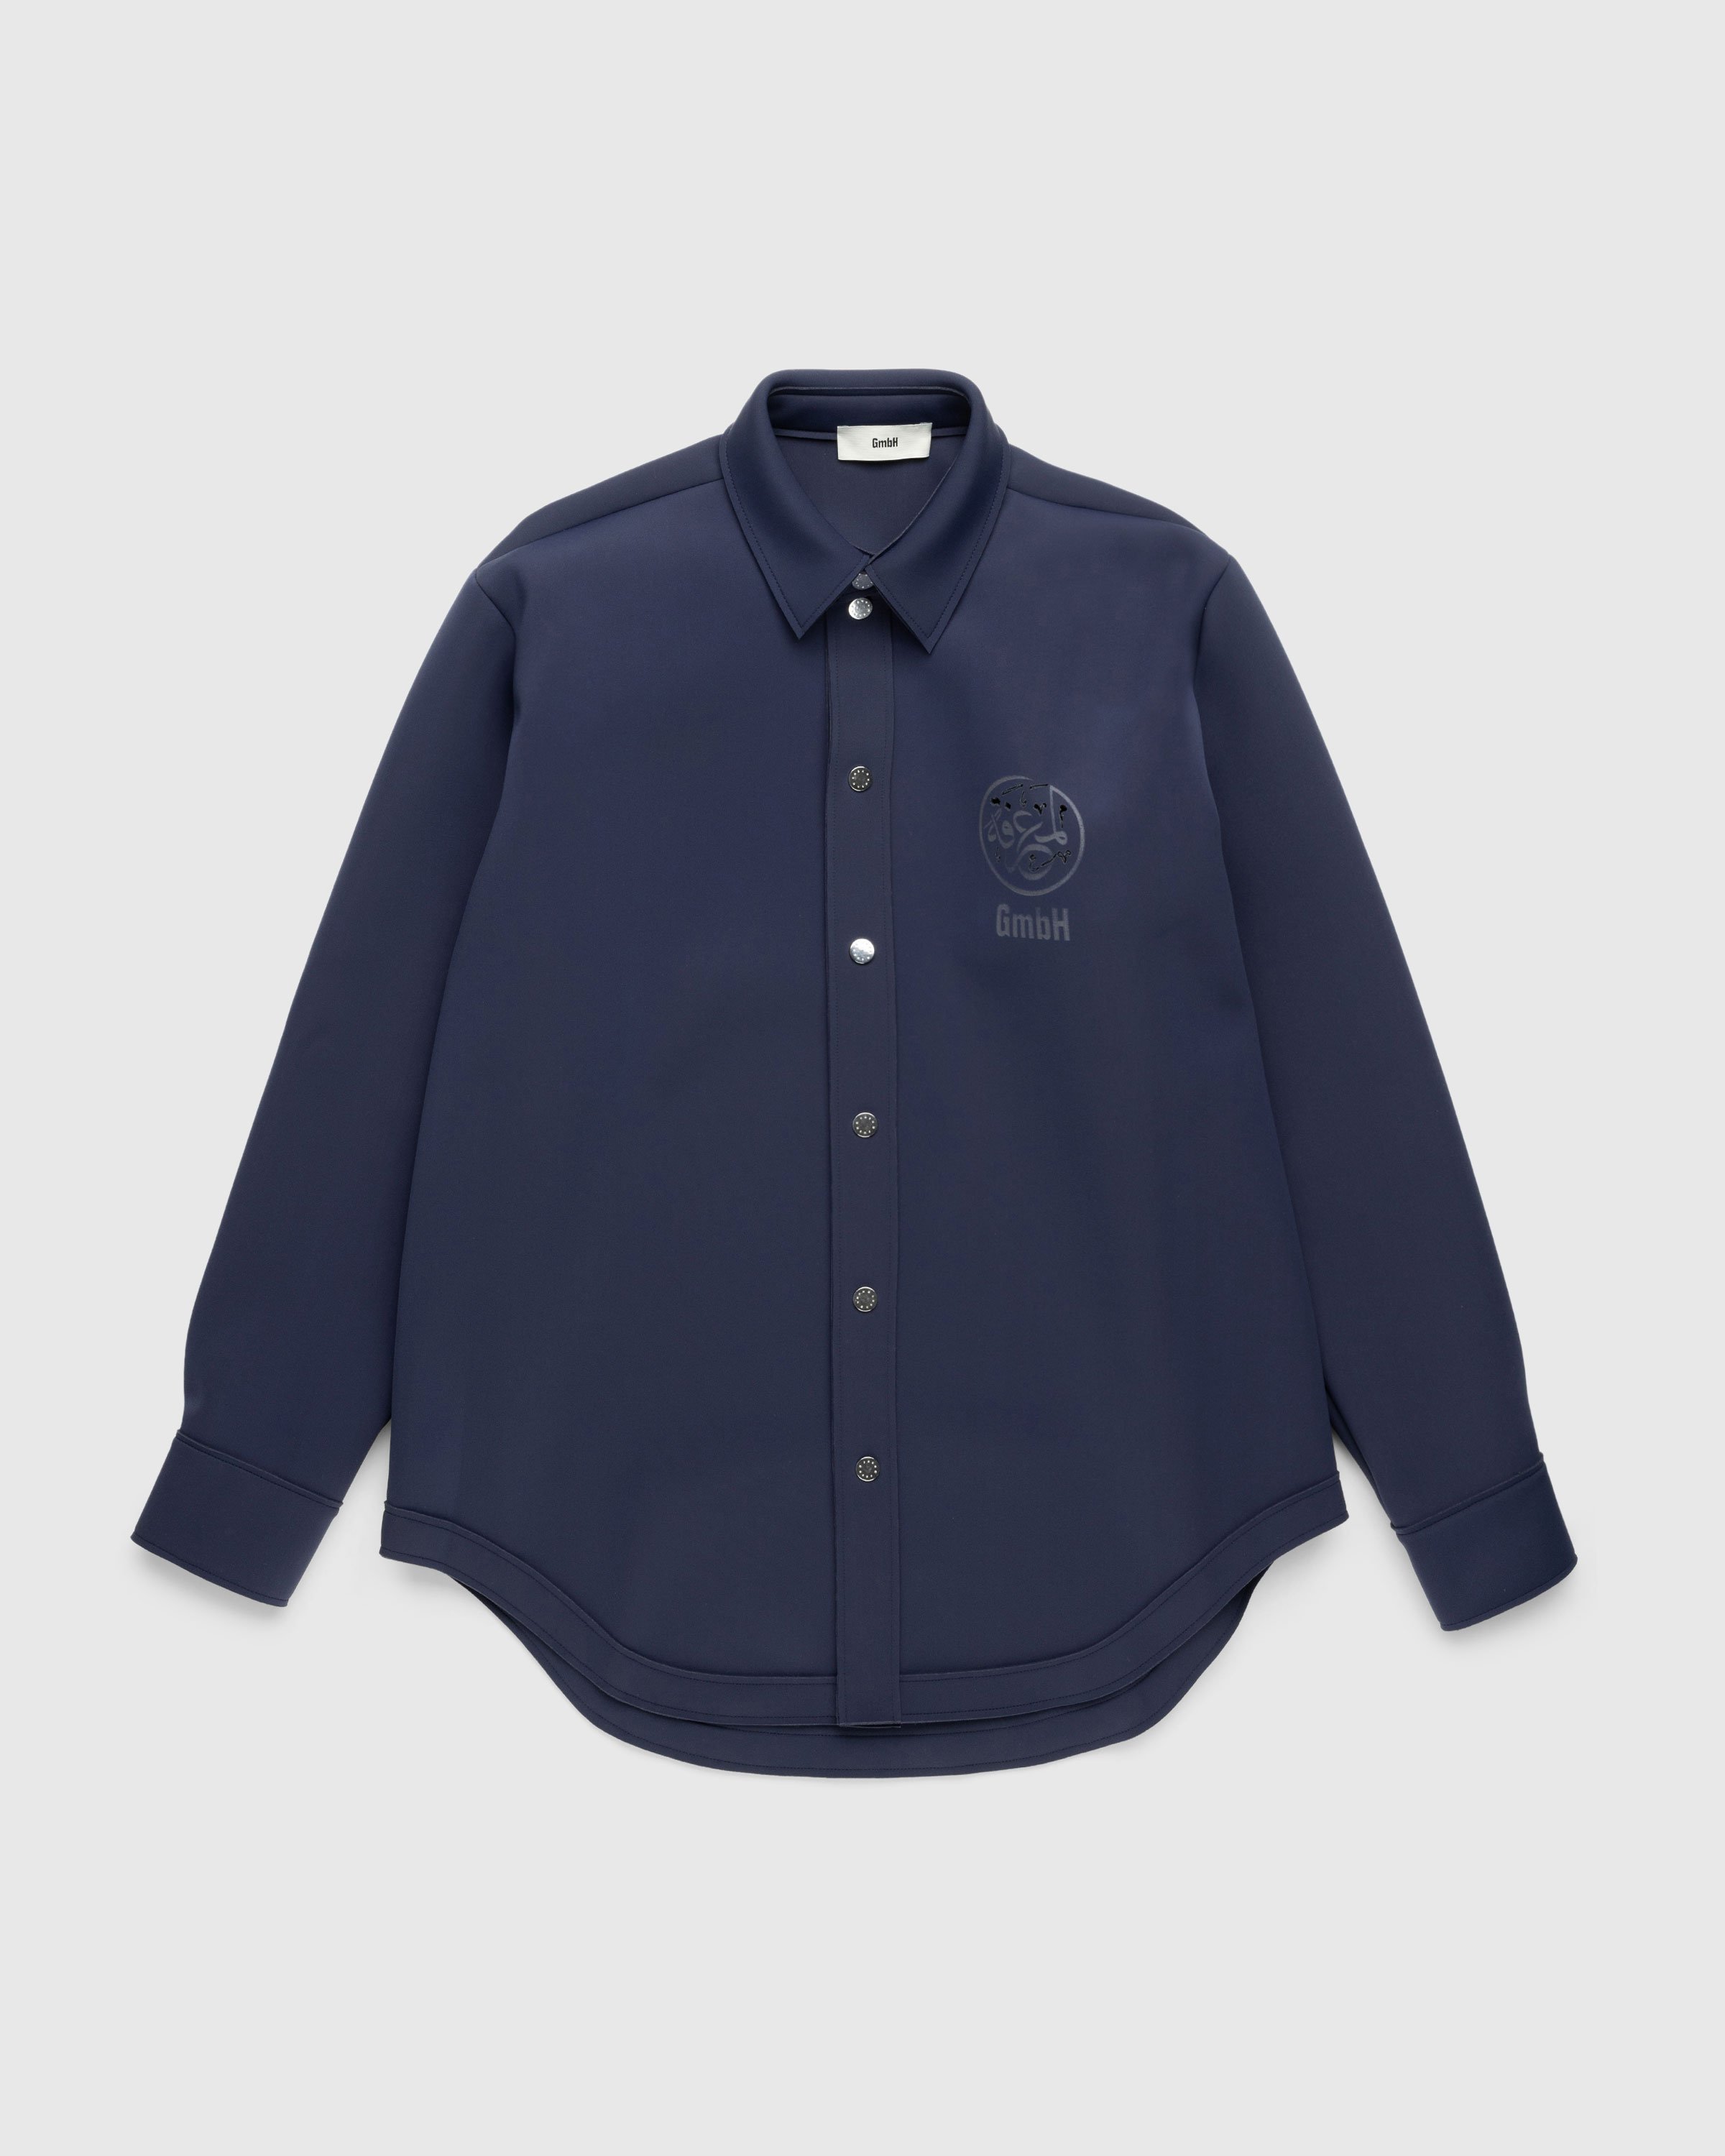 GmbH - Endyia Shirt Navy - Clothing - Blue - Image 1